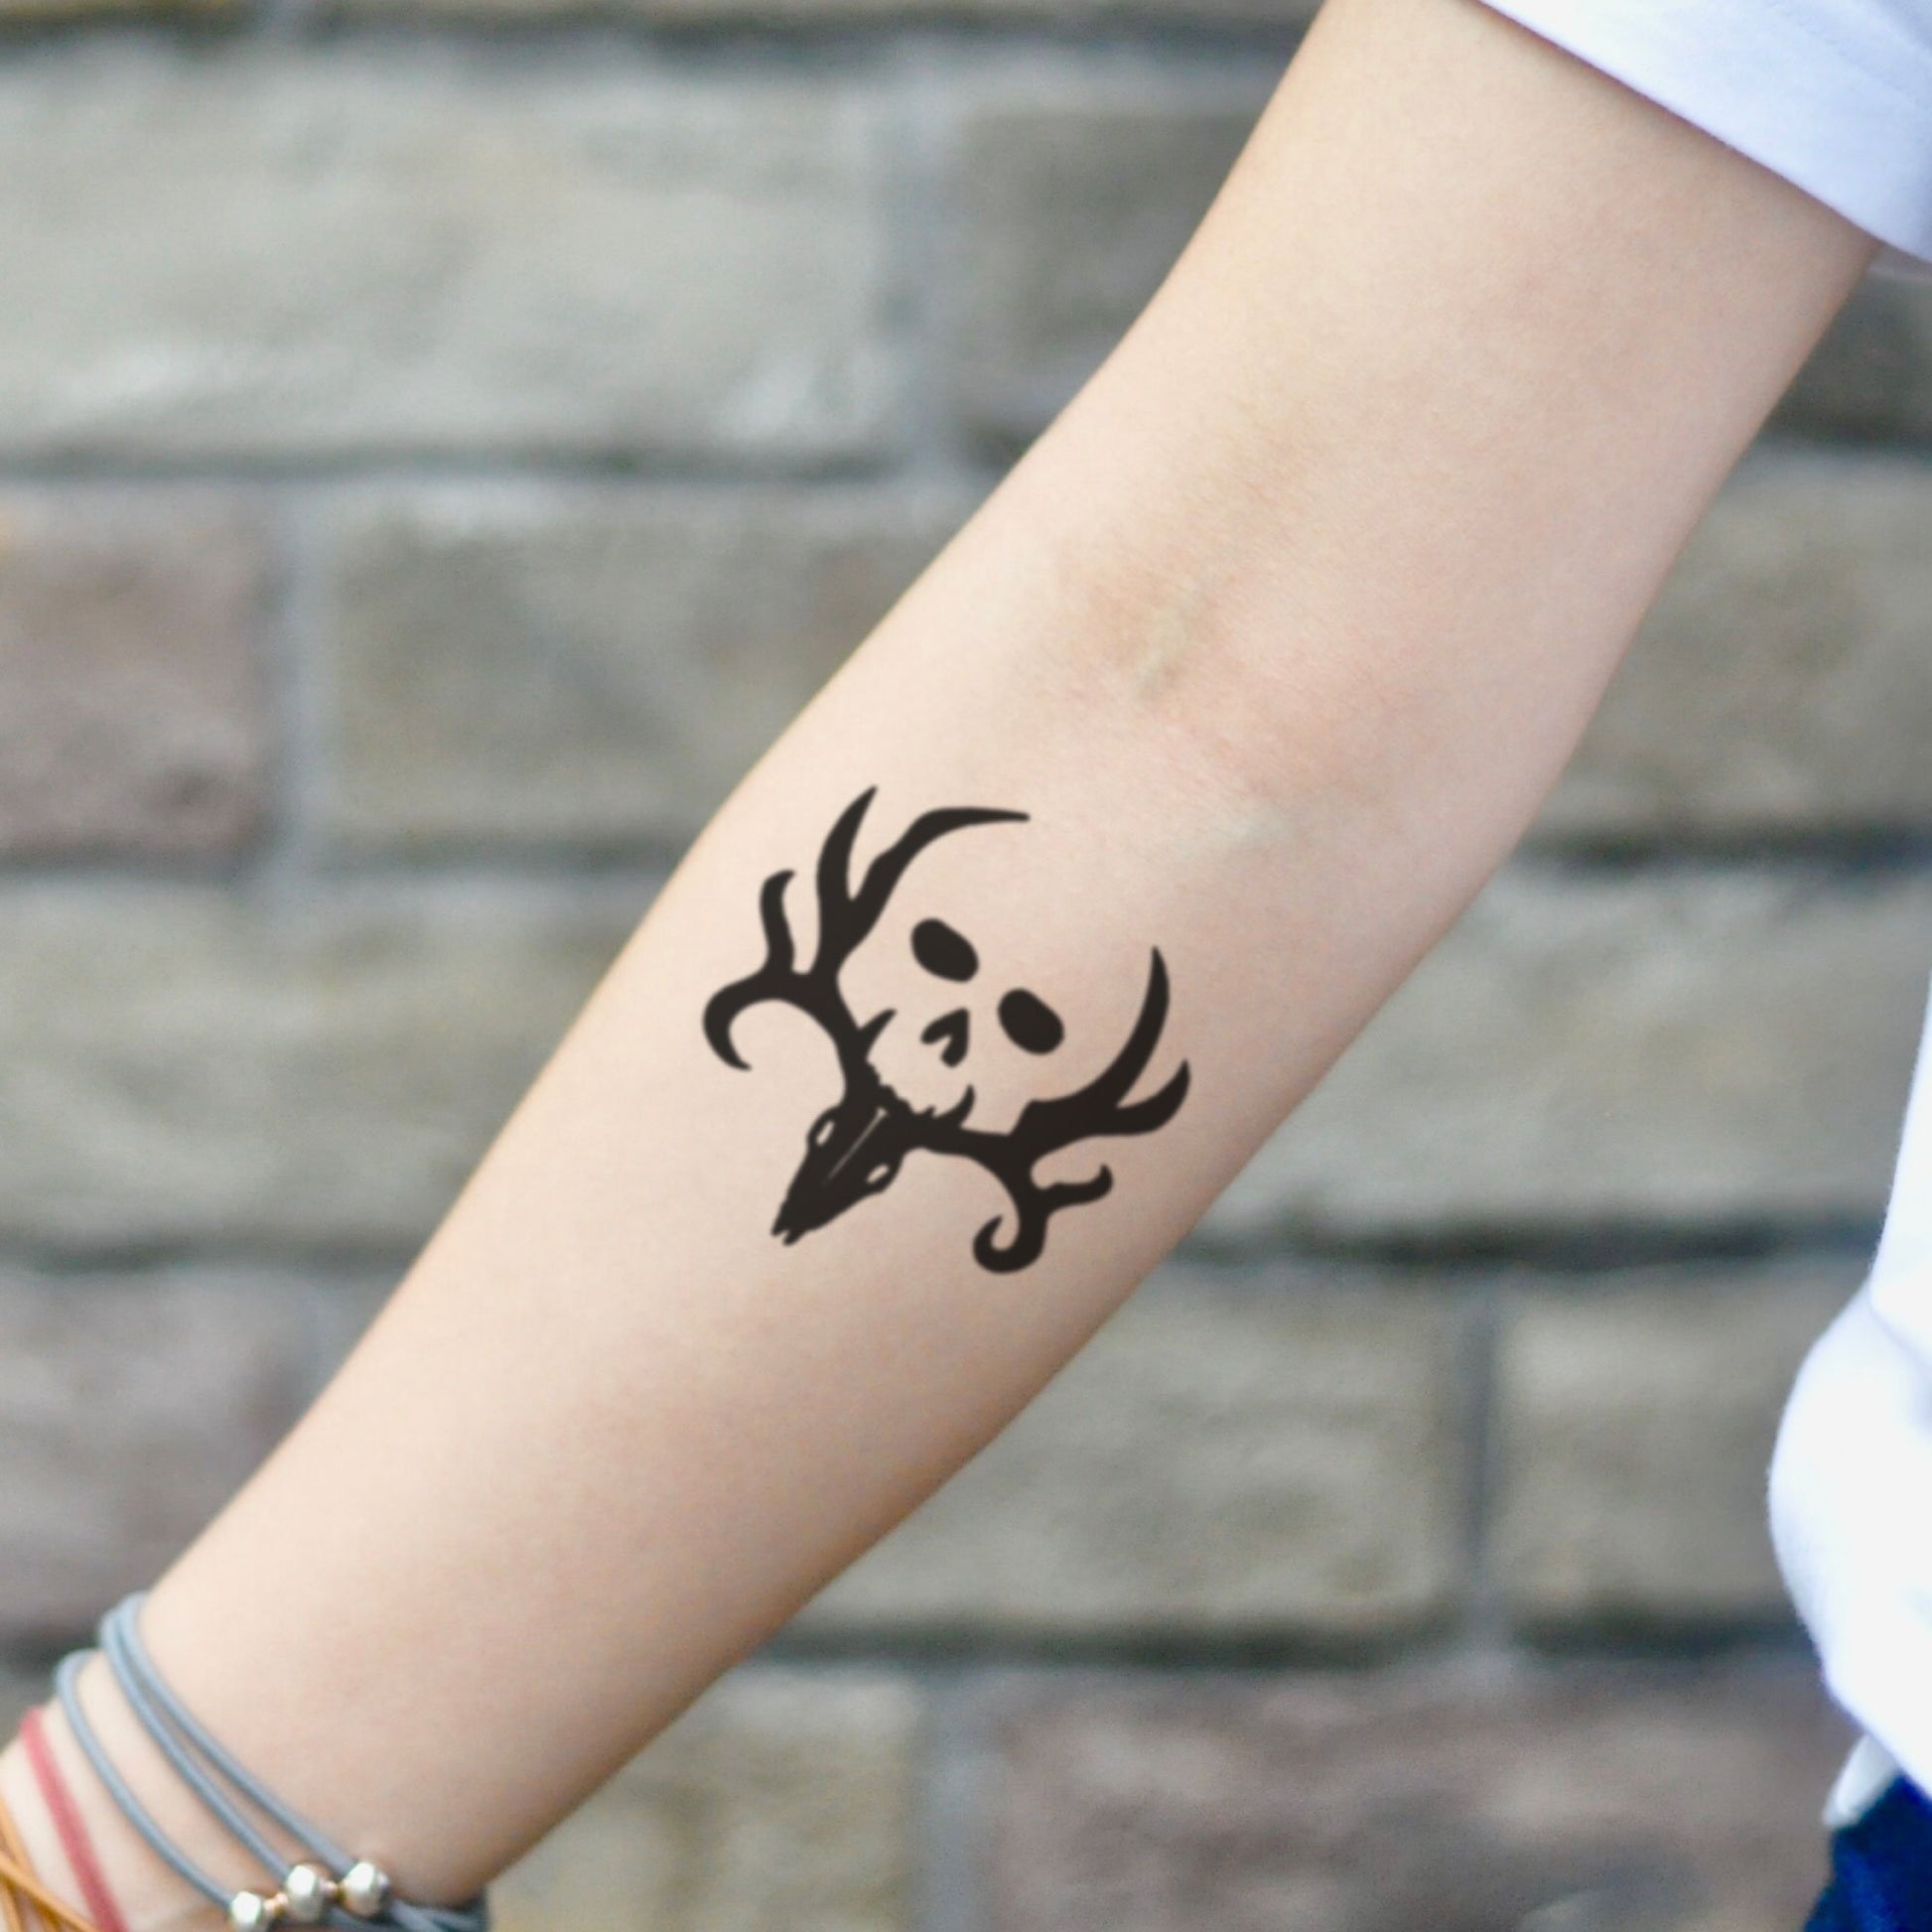 fake small bone collector minimalist temporary tattoo sticker design idea on inner arm